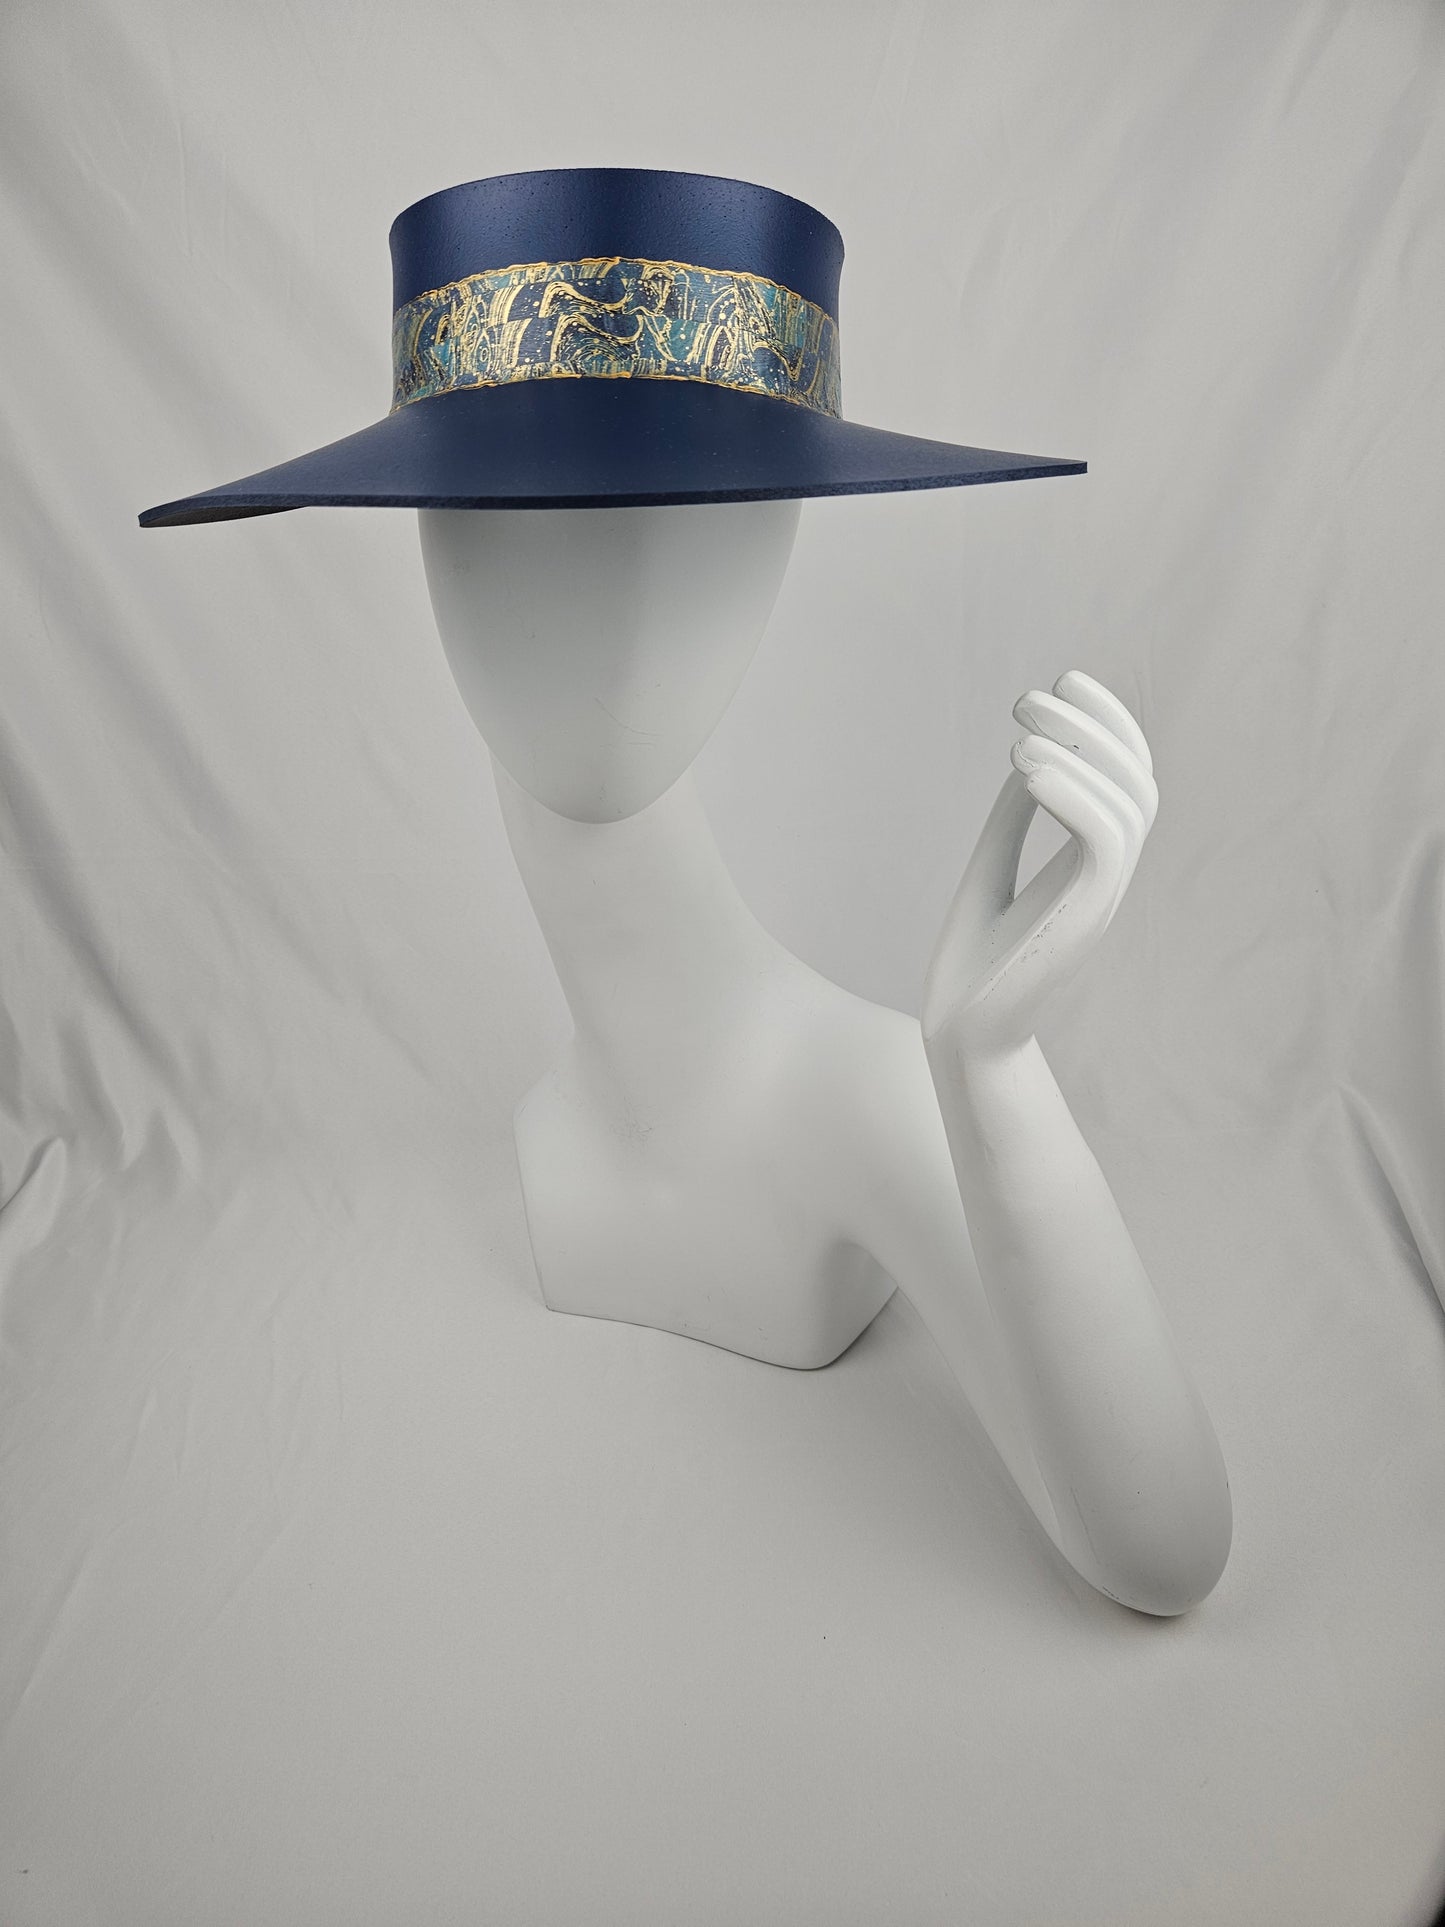 Classic Navy Audrey Foam Sun Visor Hat with Golden Marbled Band: Big Brim, Golf, Swim, UV Resistant, No Headache